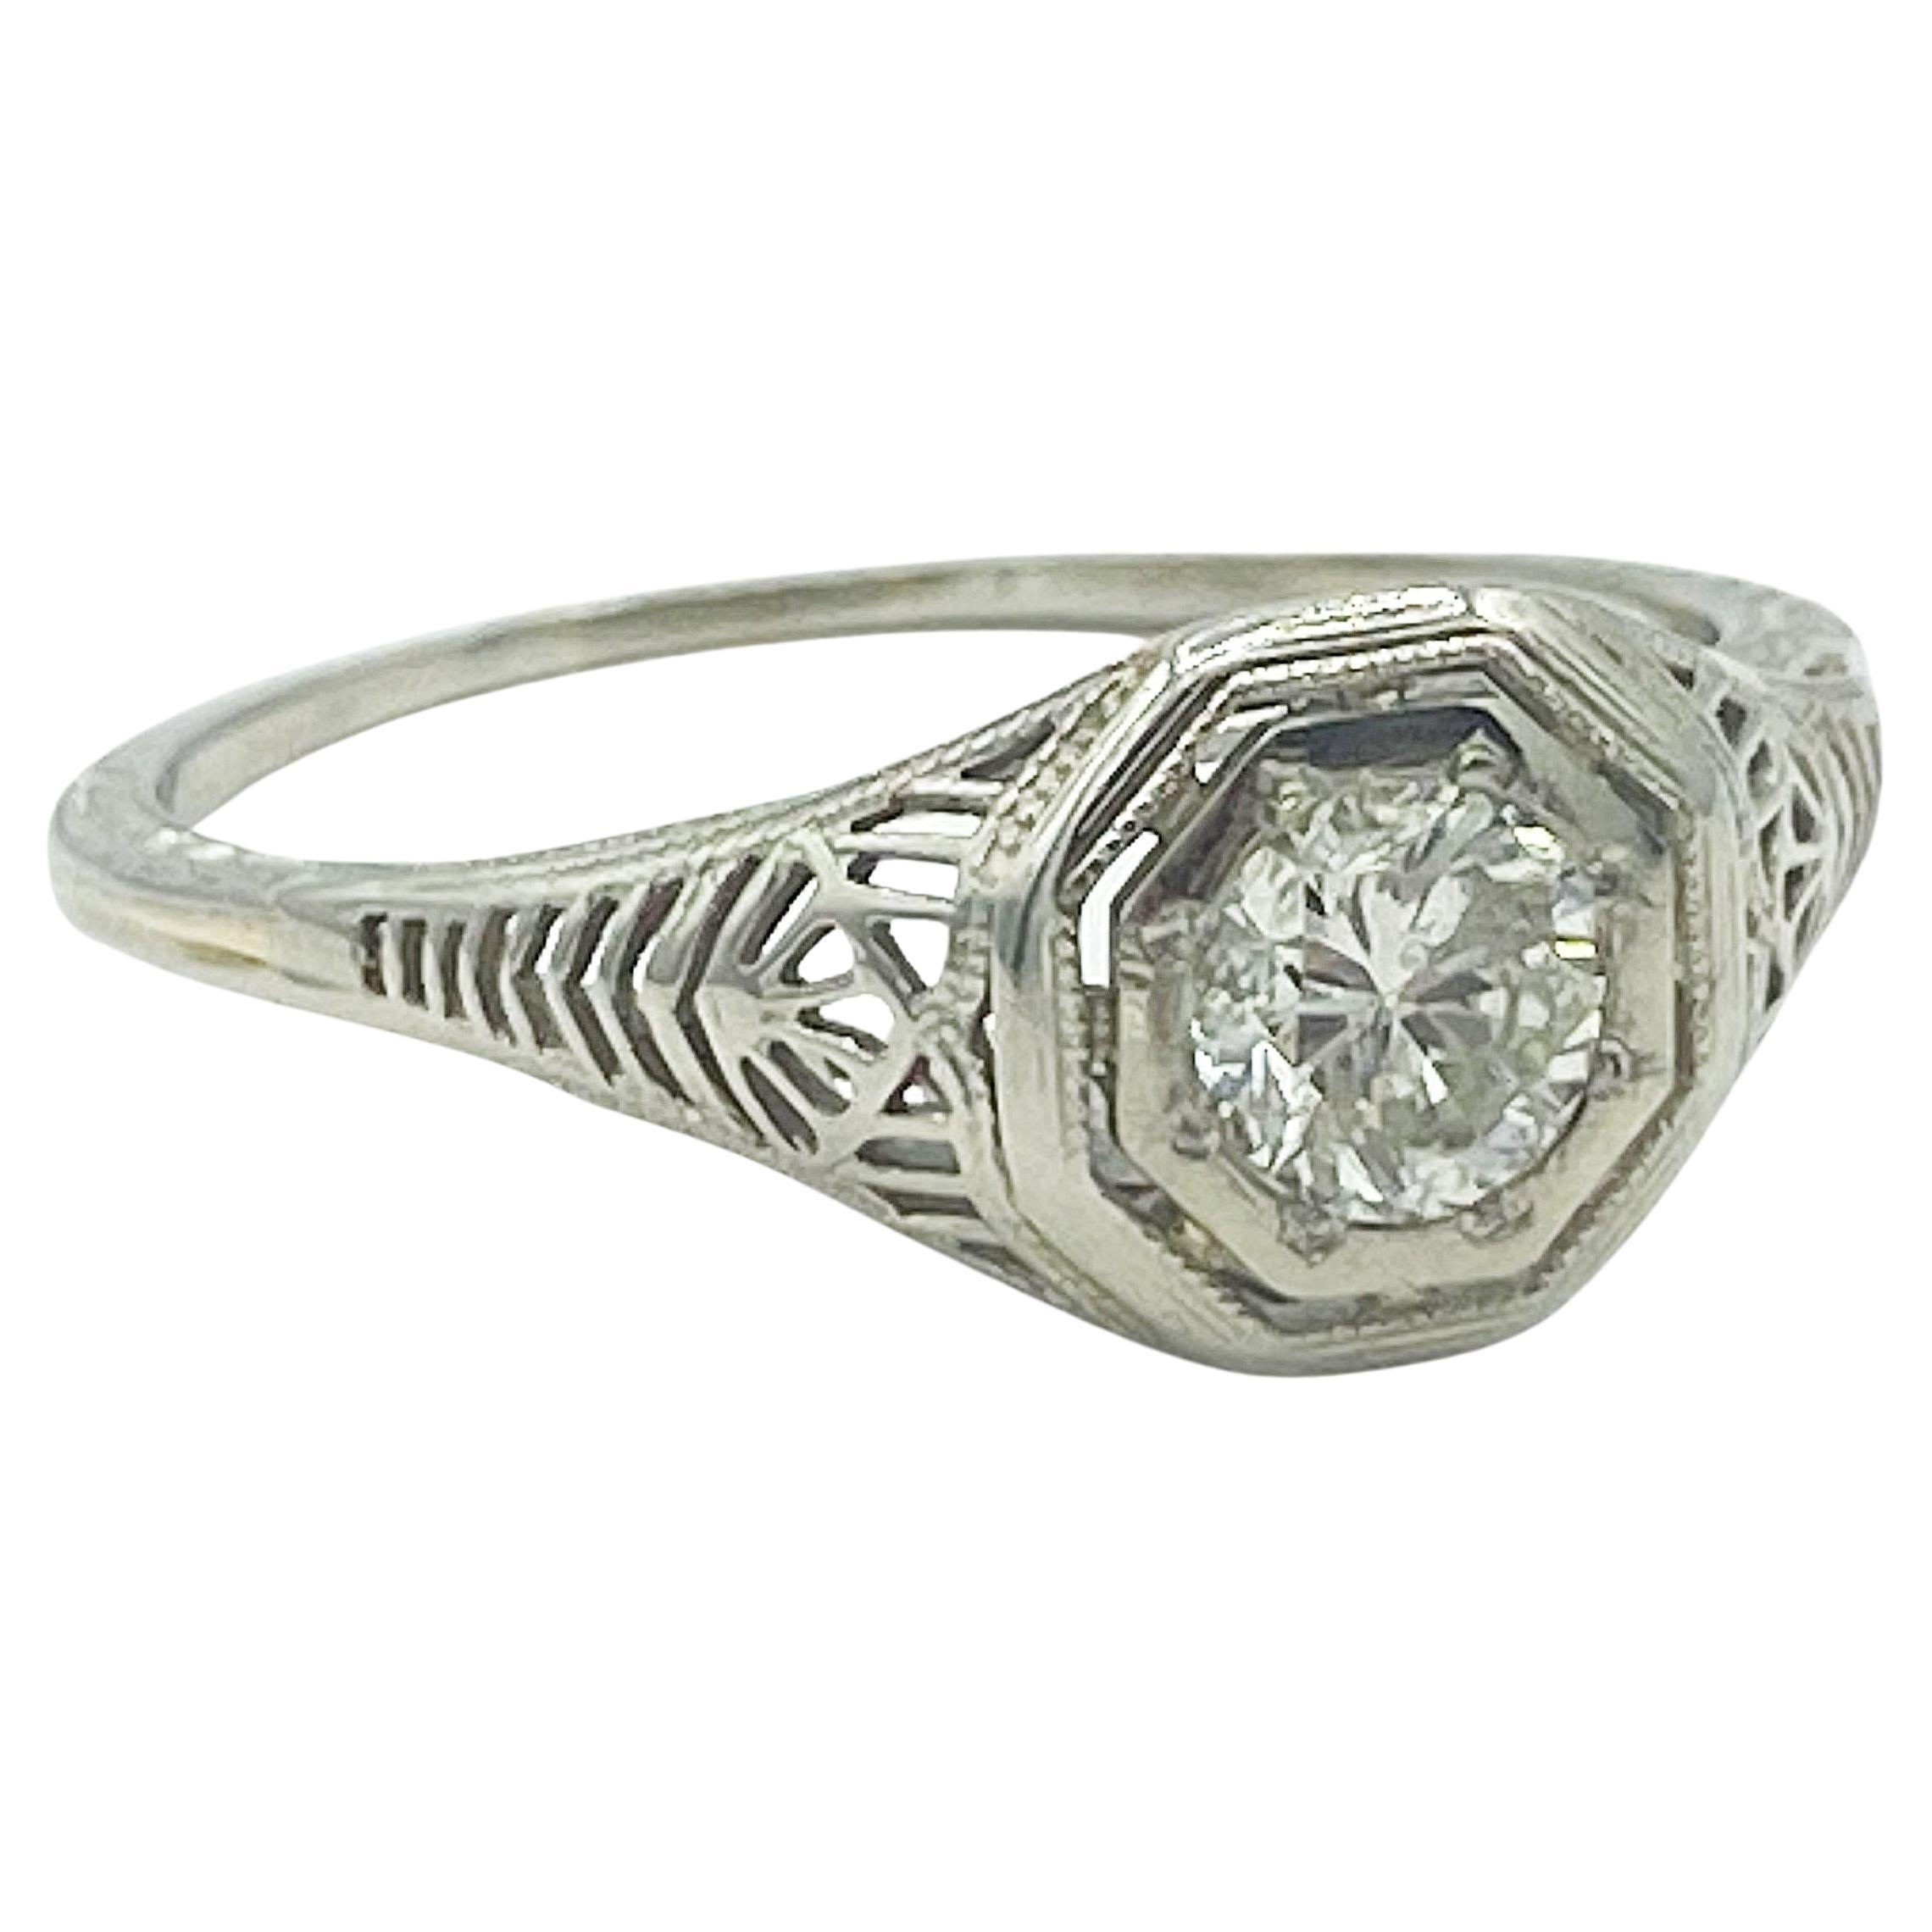 18k White Gold Vintage Engagement Ring 1.48 carat total E-VS1 Princess Cut  from Tiffany Jones Designs